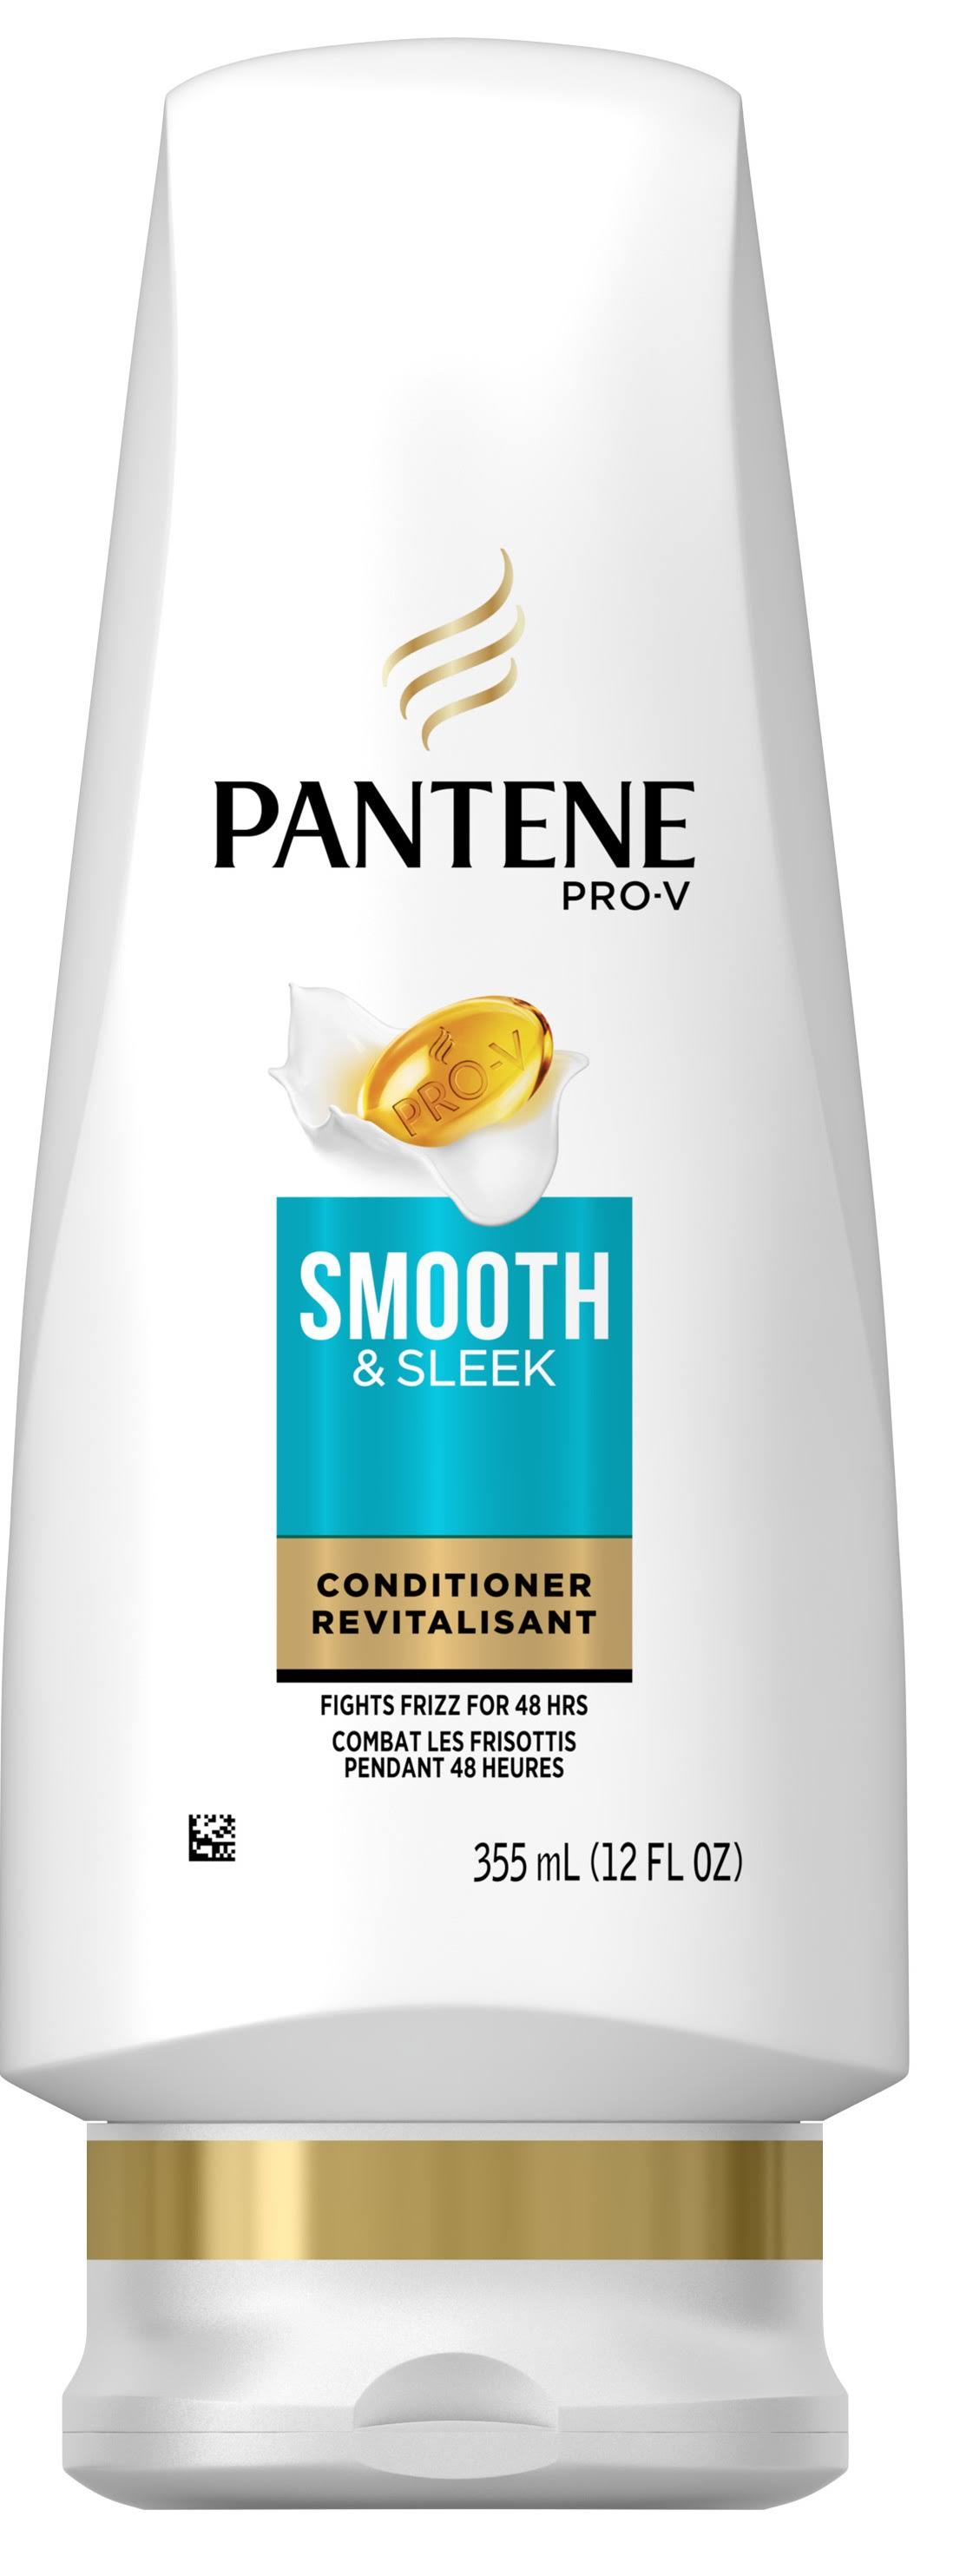 Pantene Pro-V Smooth & Sleek Conditioner